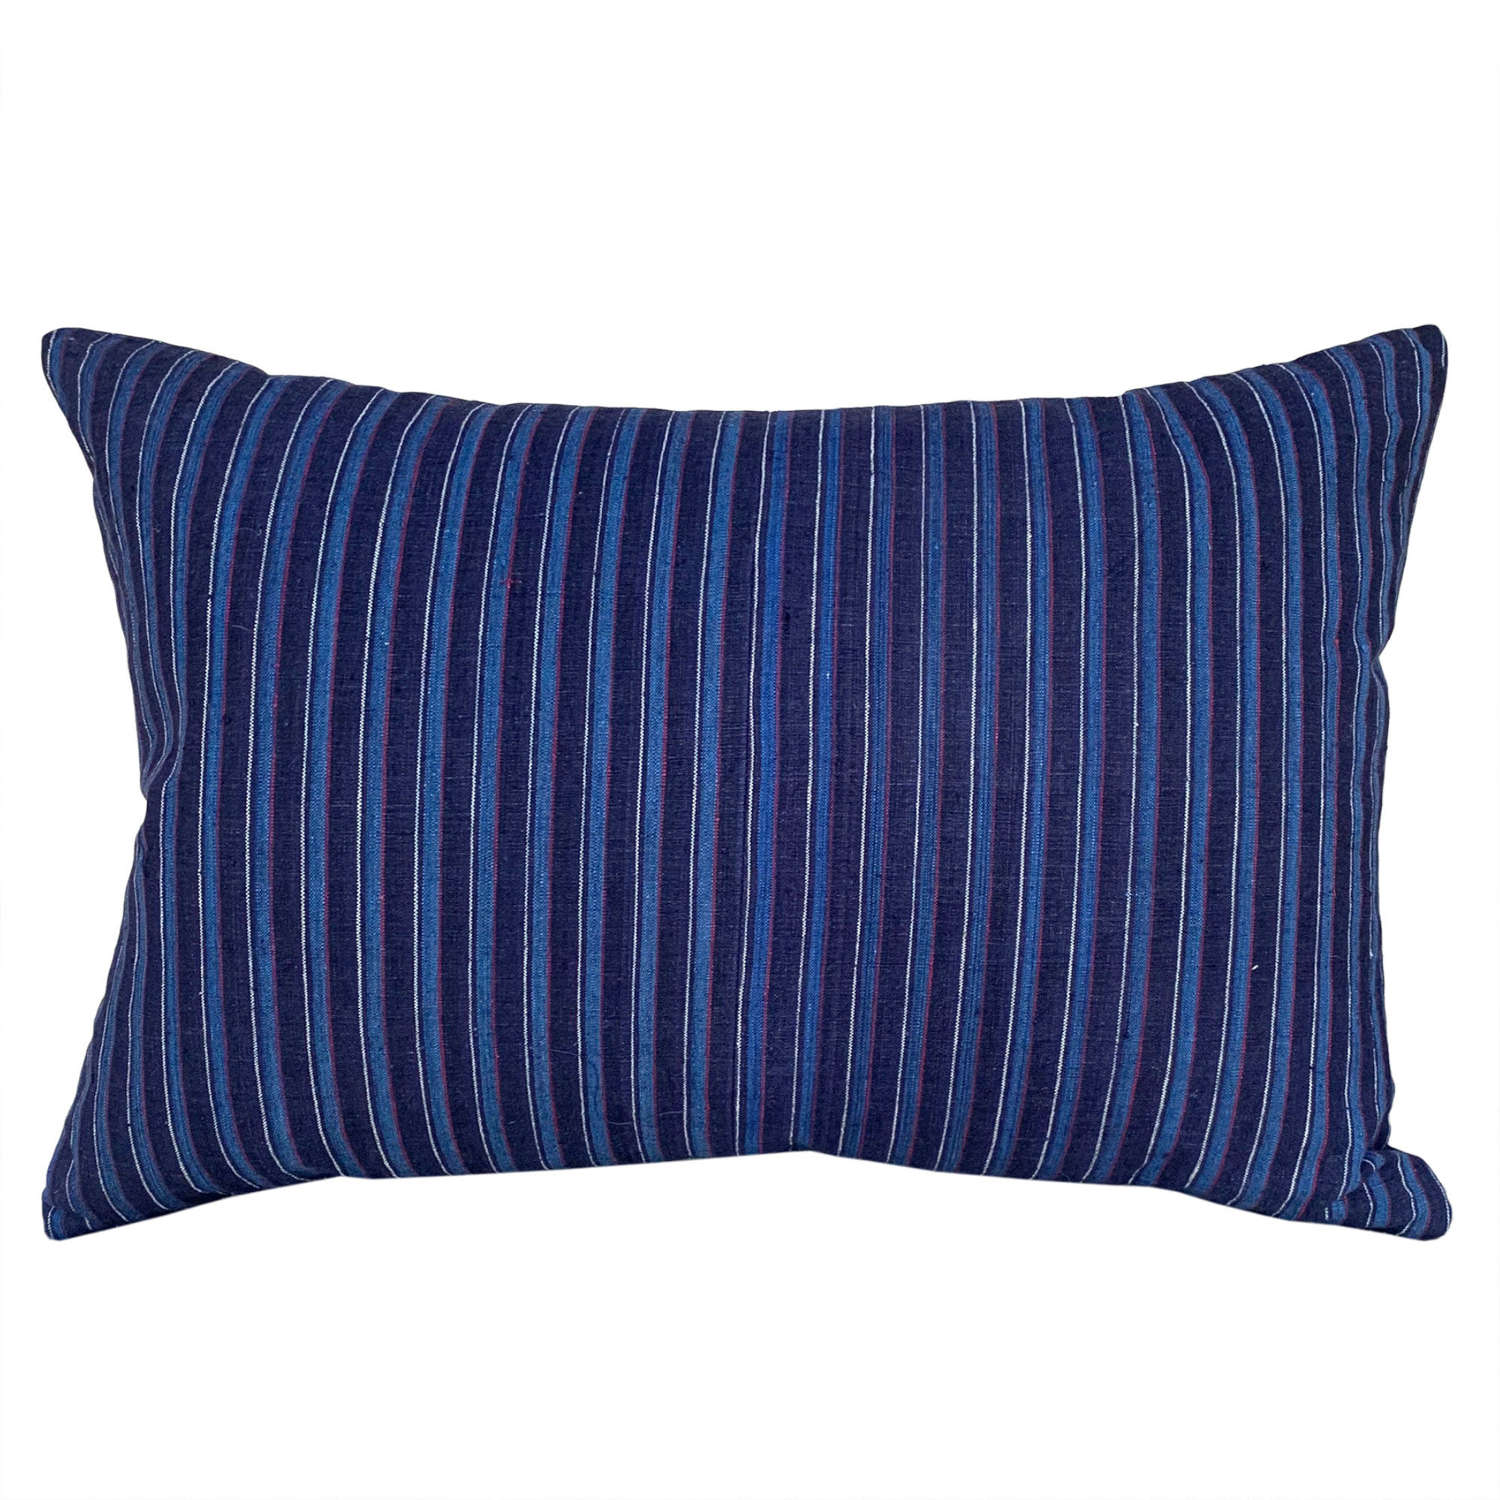 Indigo Striped Cushions